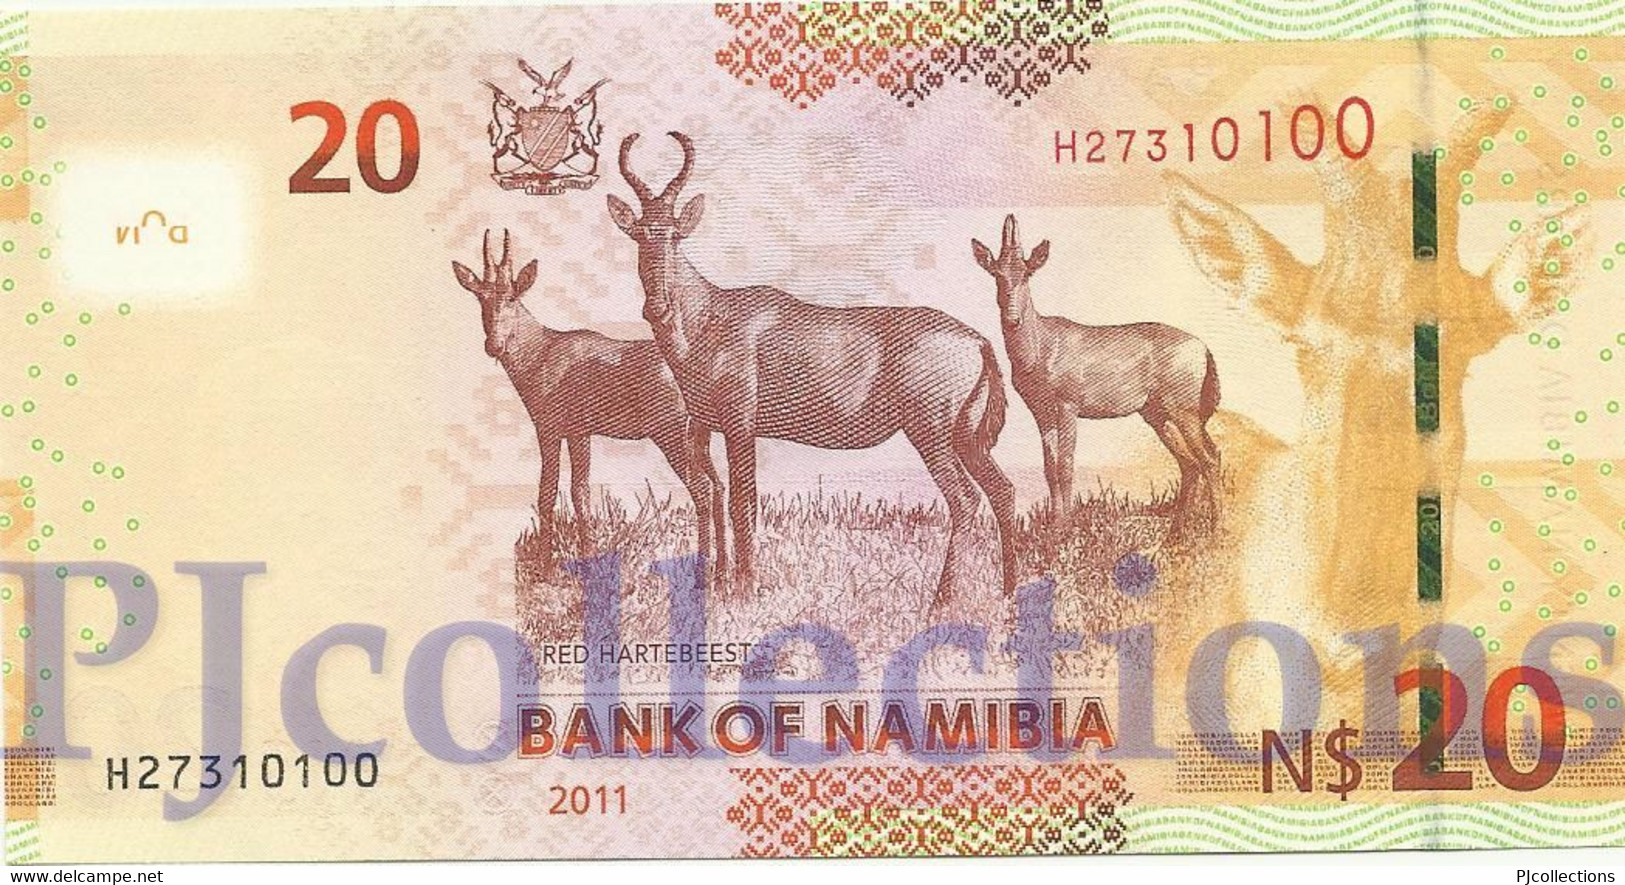 NAMIBIA 20 DOLLARS 2012 PICK 12a UNC - Namibia